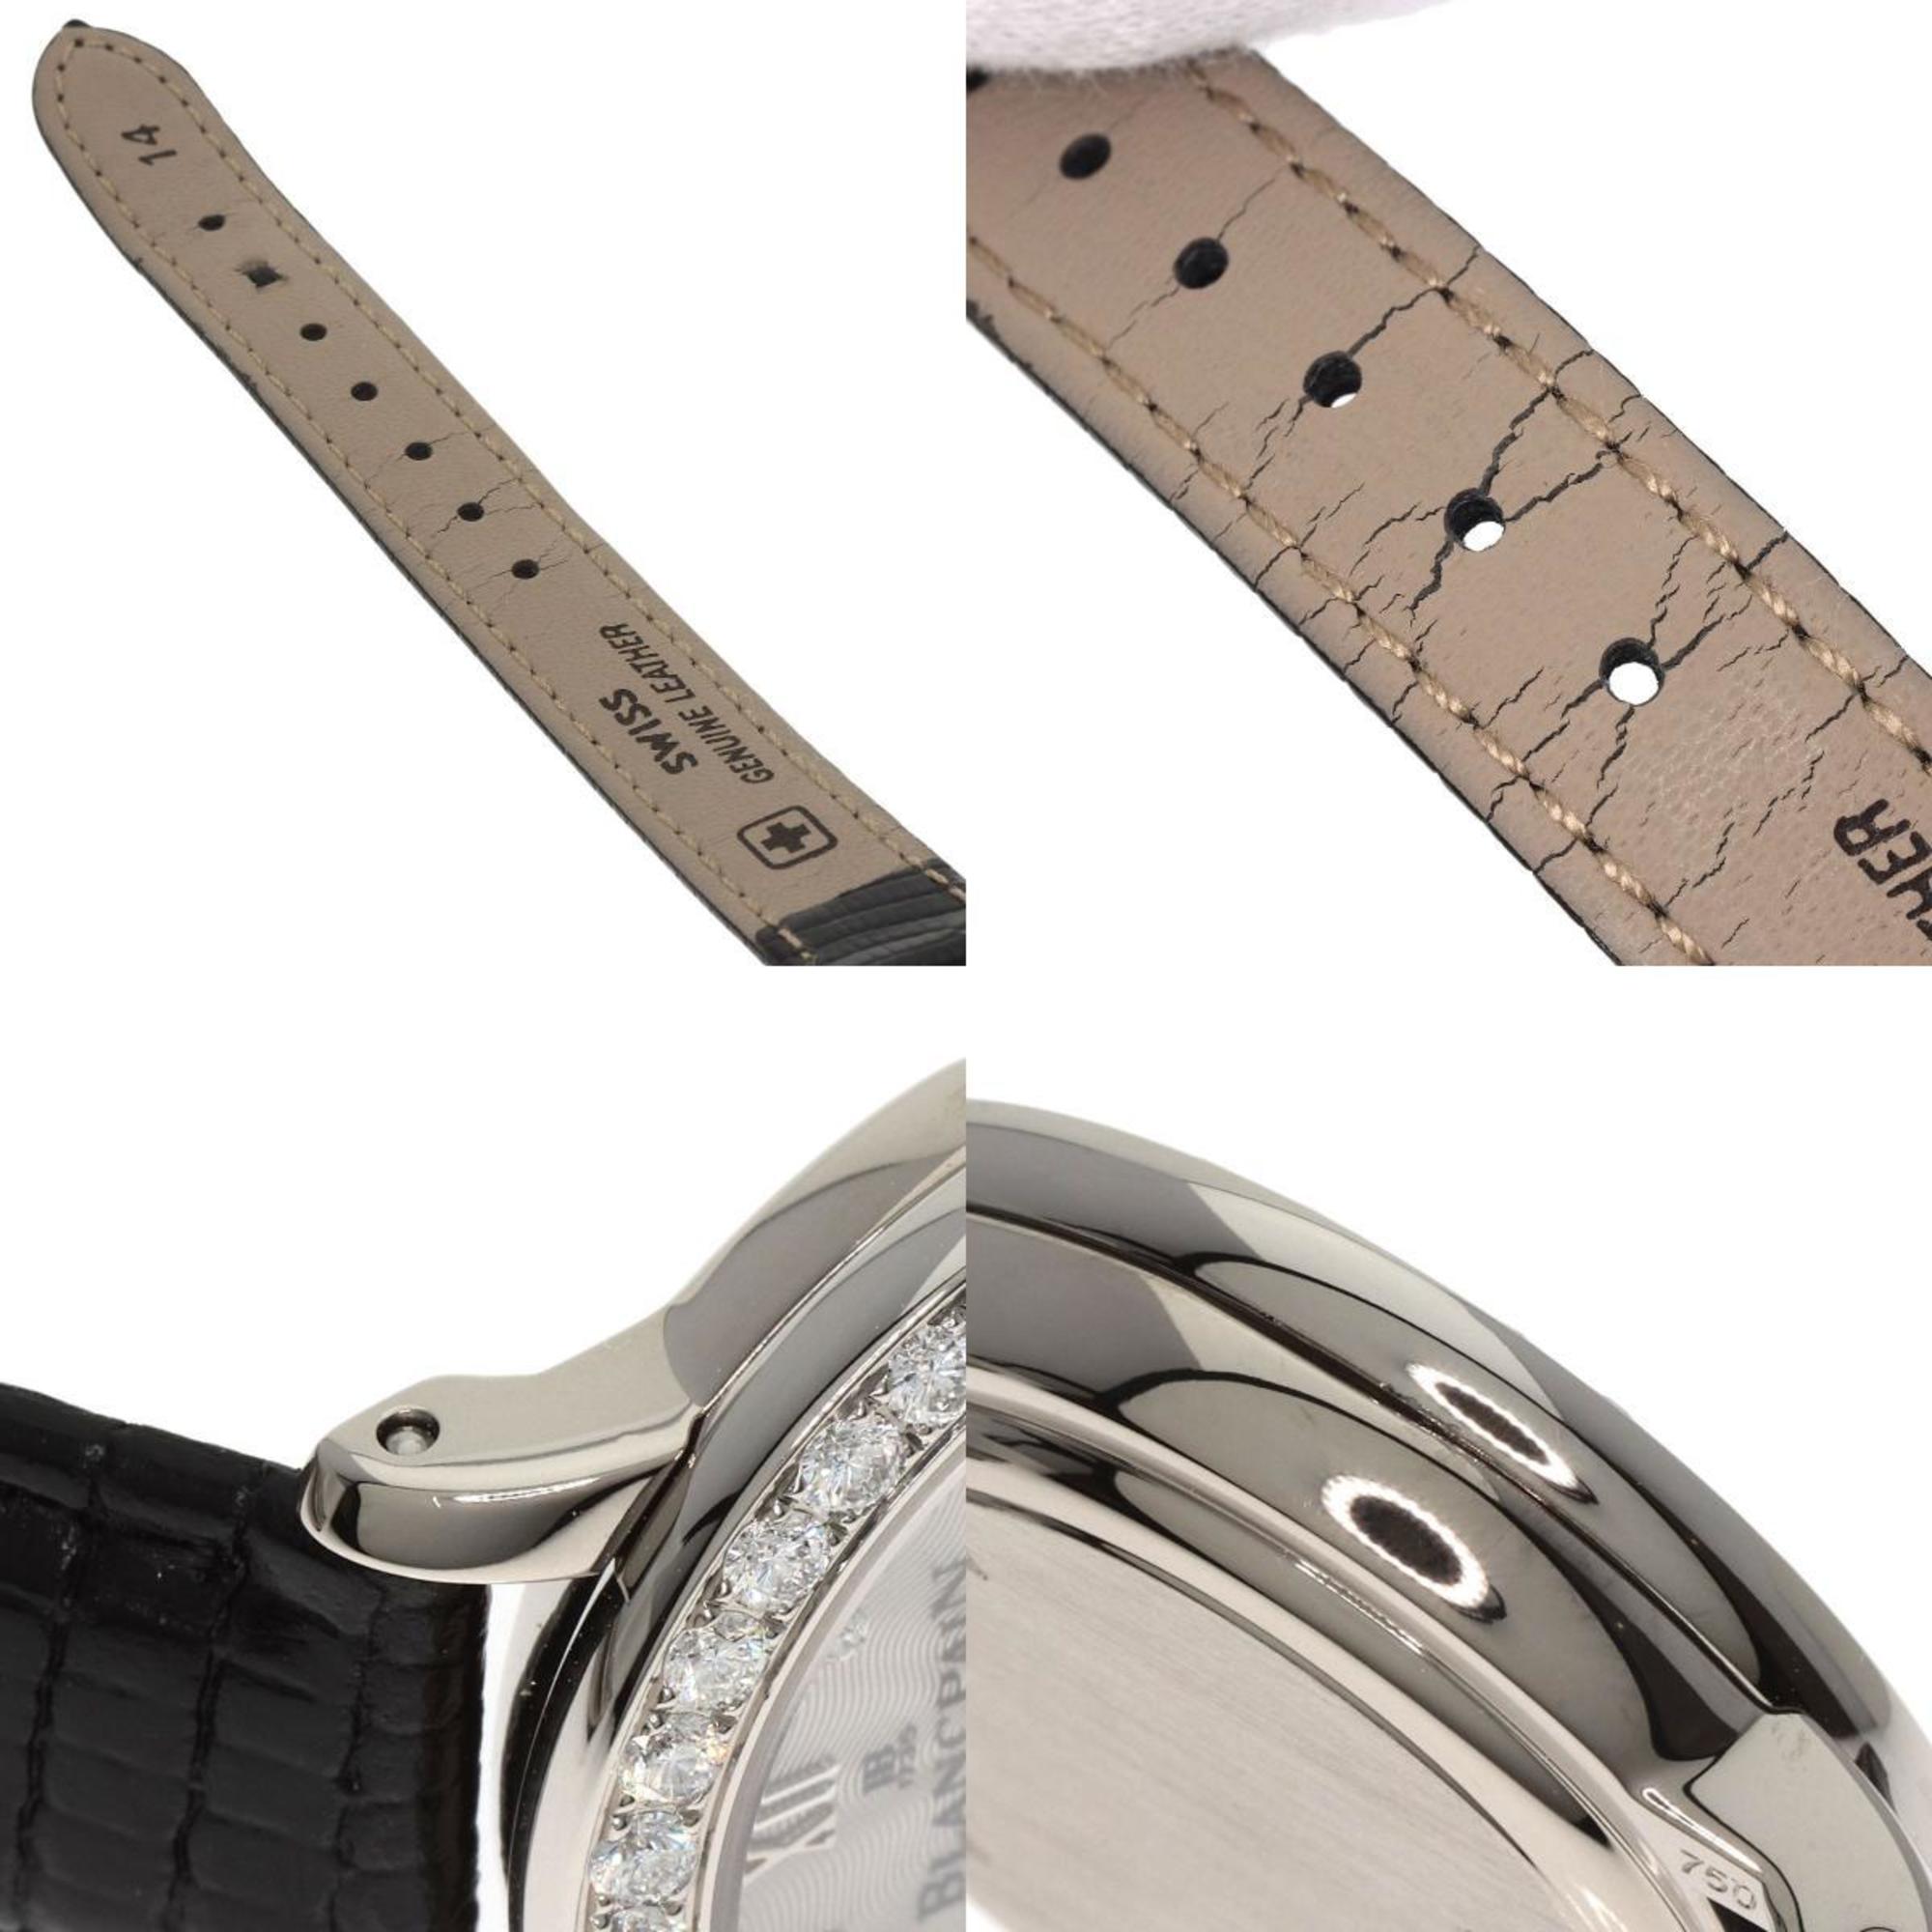 Blancpain B0096A 192GC Ladybird Bezel Diamond Manufacturer Complete Wristwatch K18 White Gold Leather Ladies